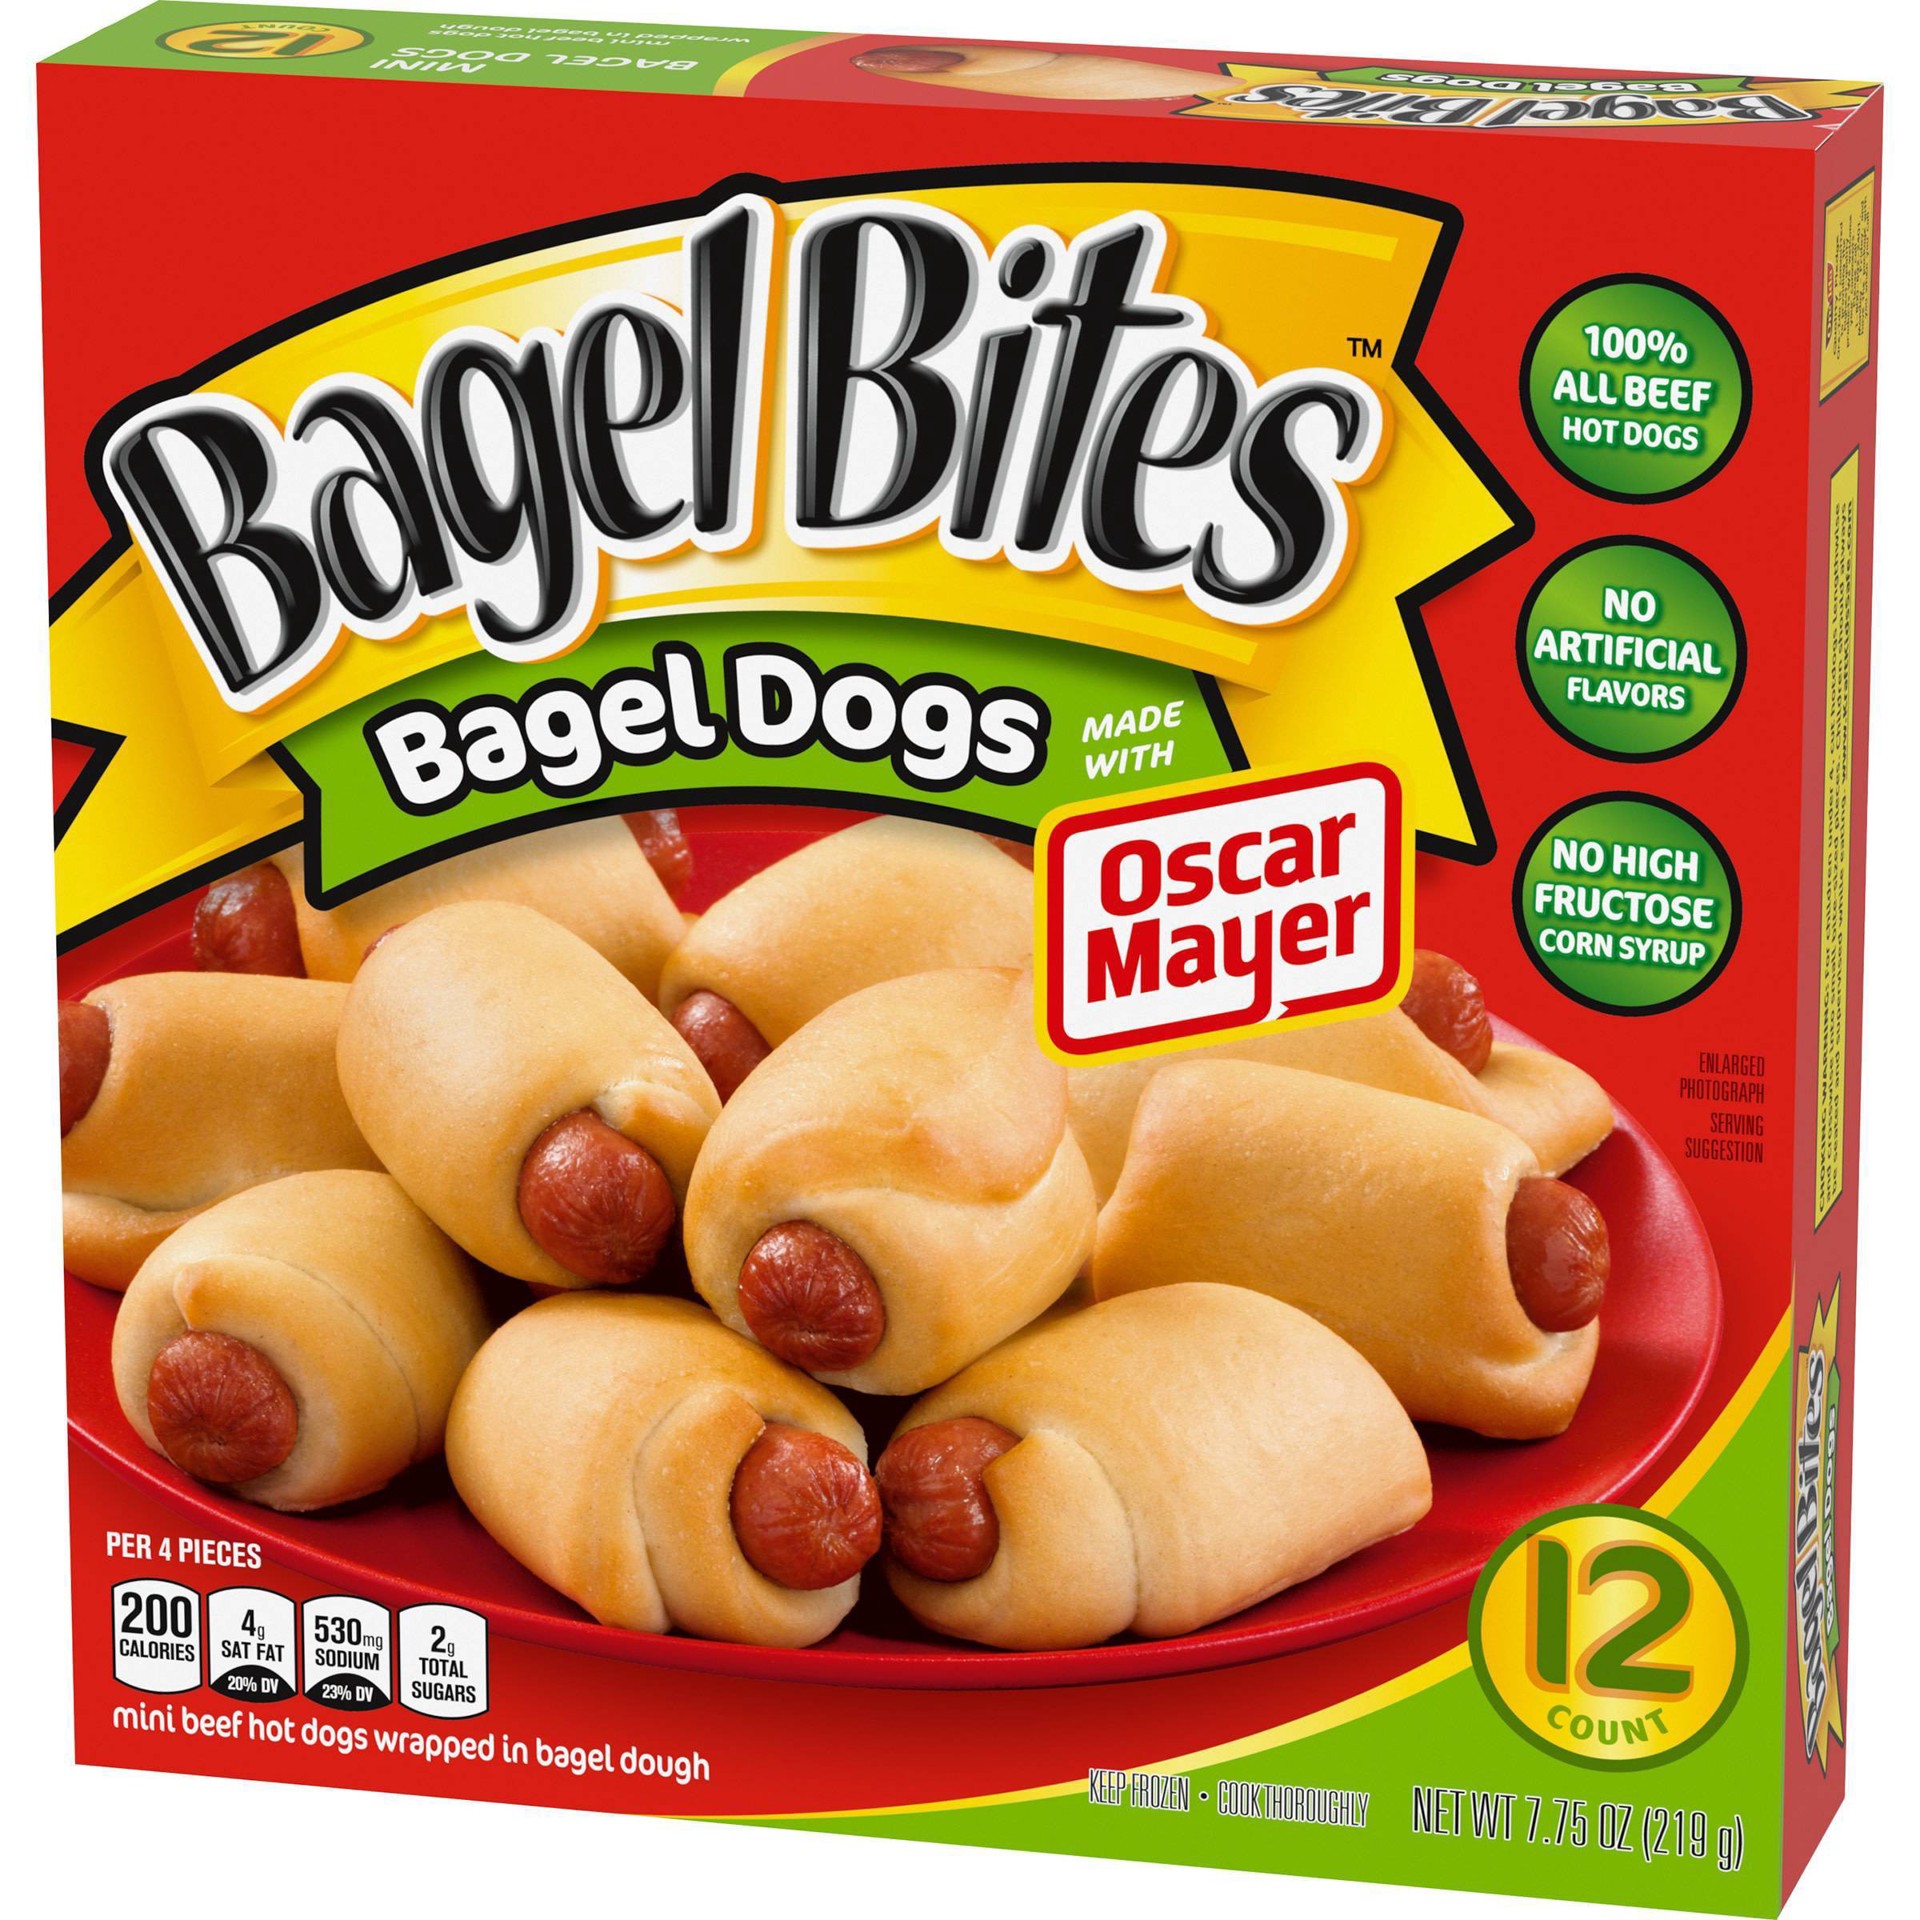 slide 2 of 9, Bagel Bites Bagel Dogs with Oscar Mayer Frozen Snacks, 12 ct Box, 